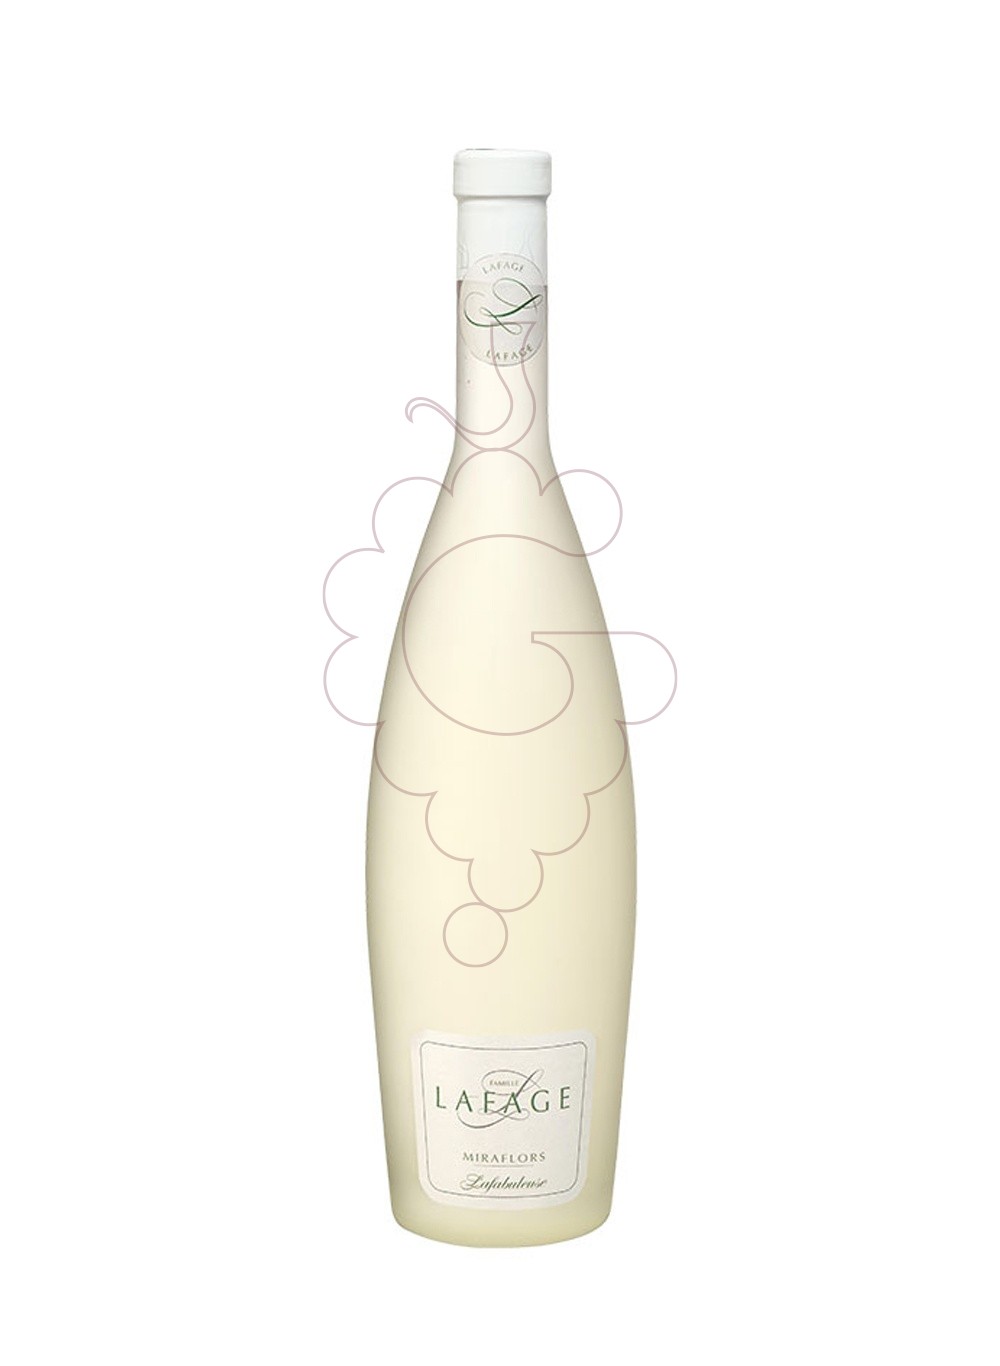 Foto Lafage Miraflors Lafabuleuse Blanc vi blanc